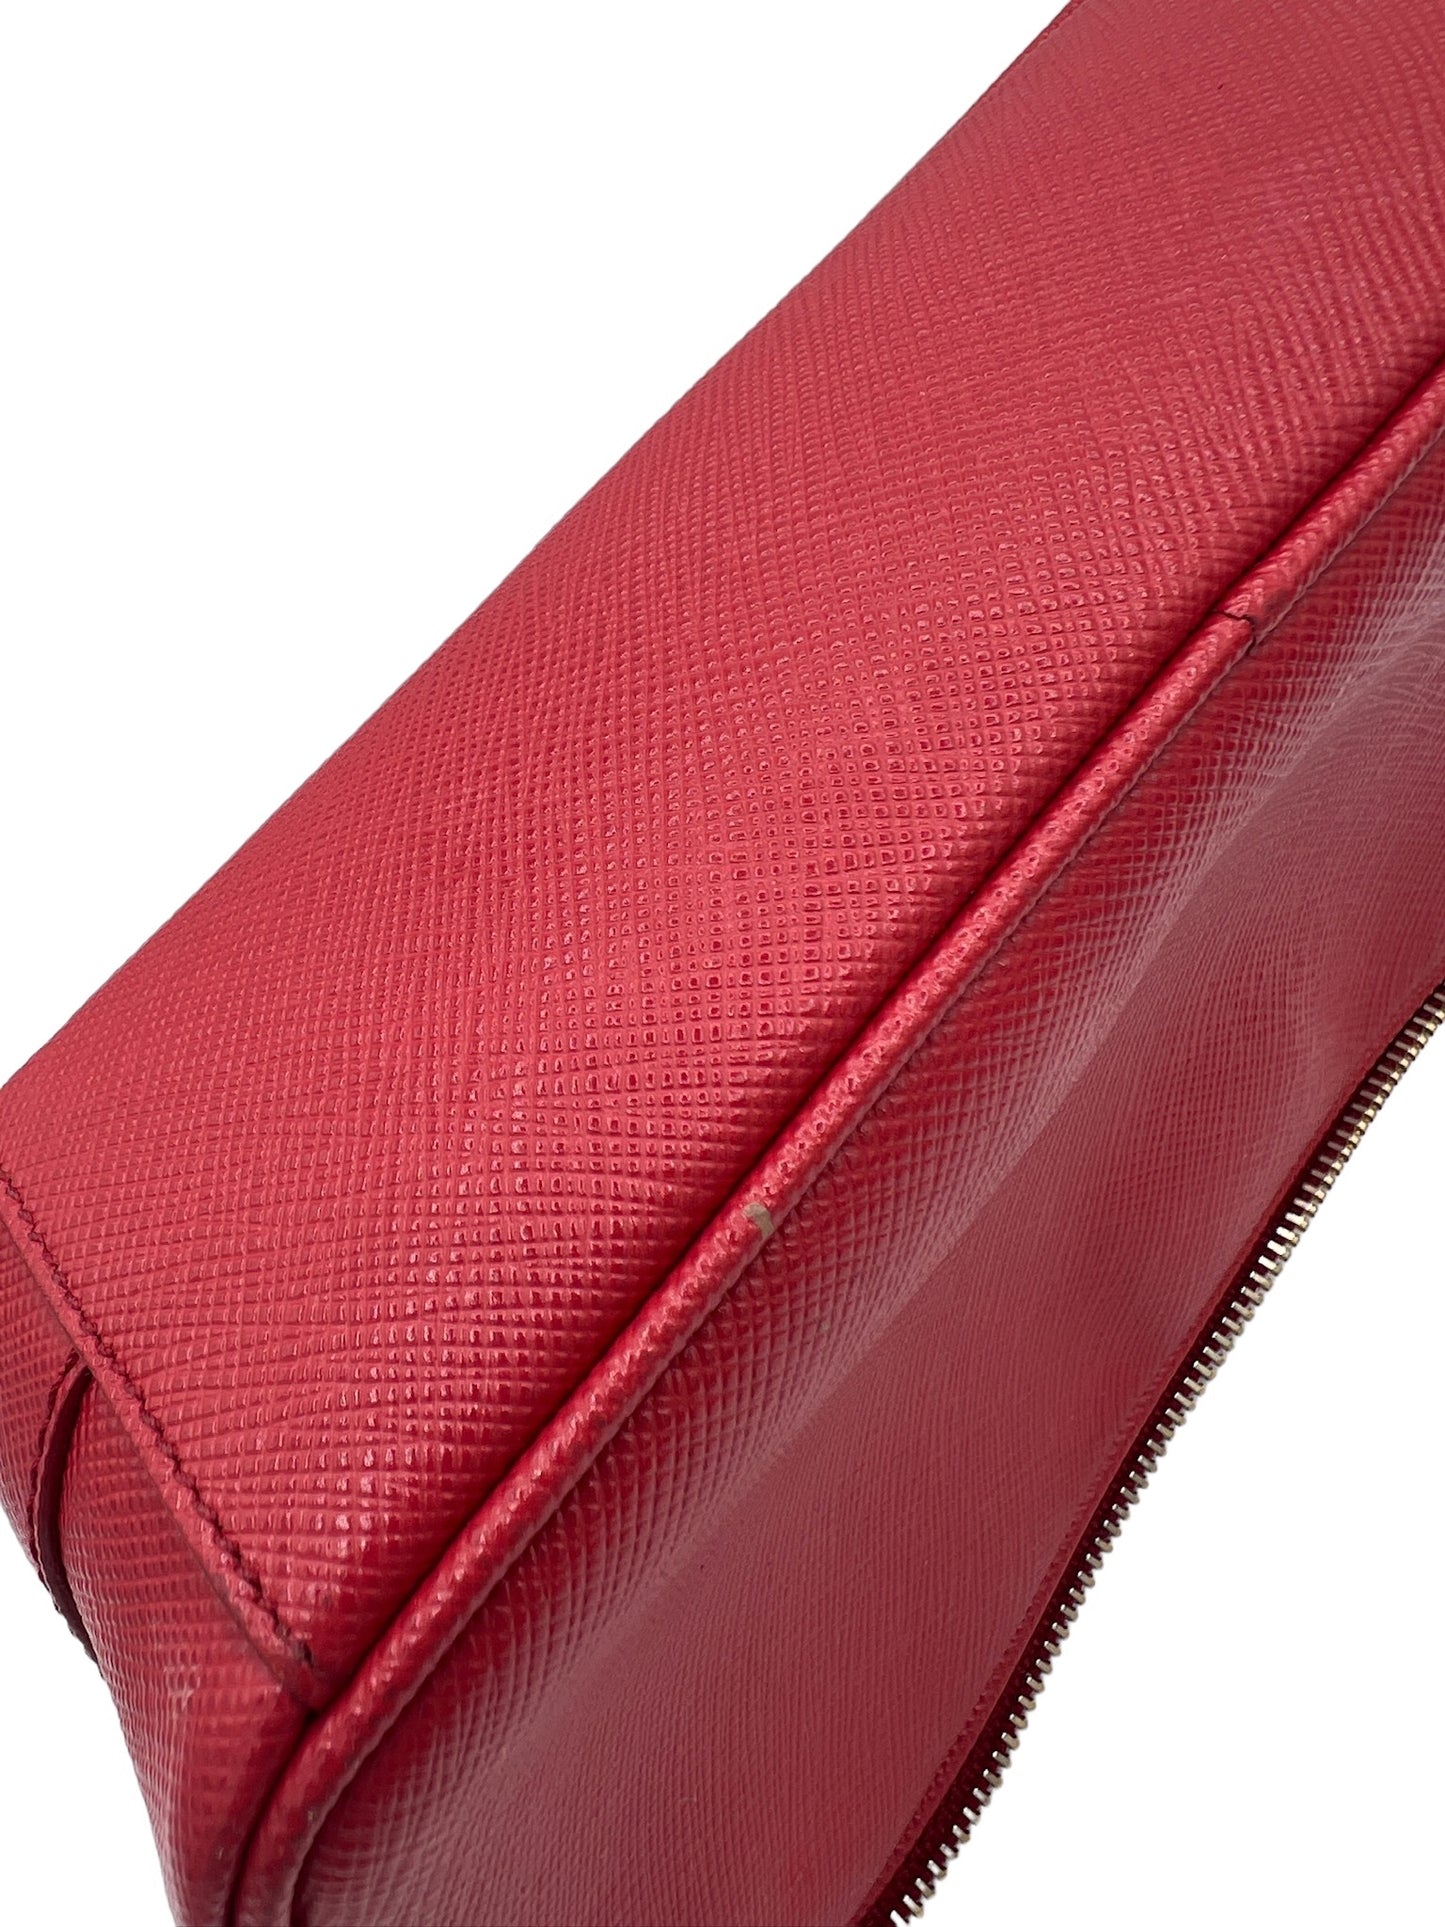 PRADA -  Red Leather Crossbody Bag